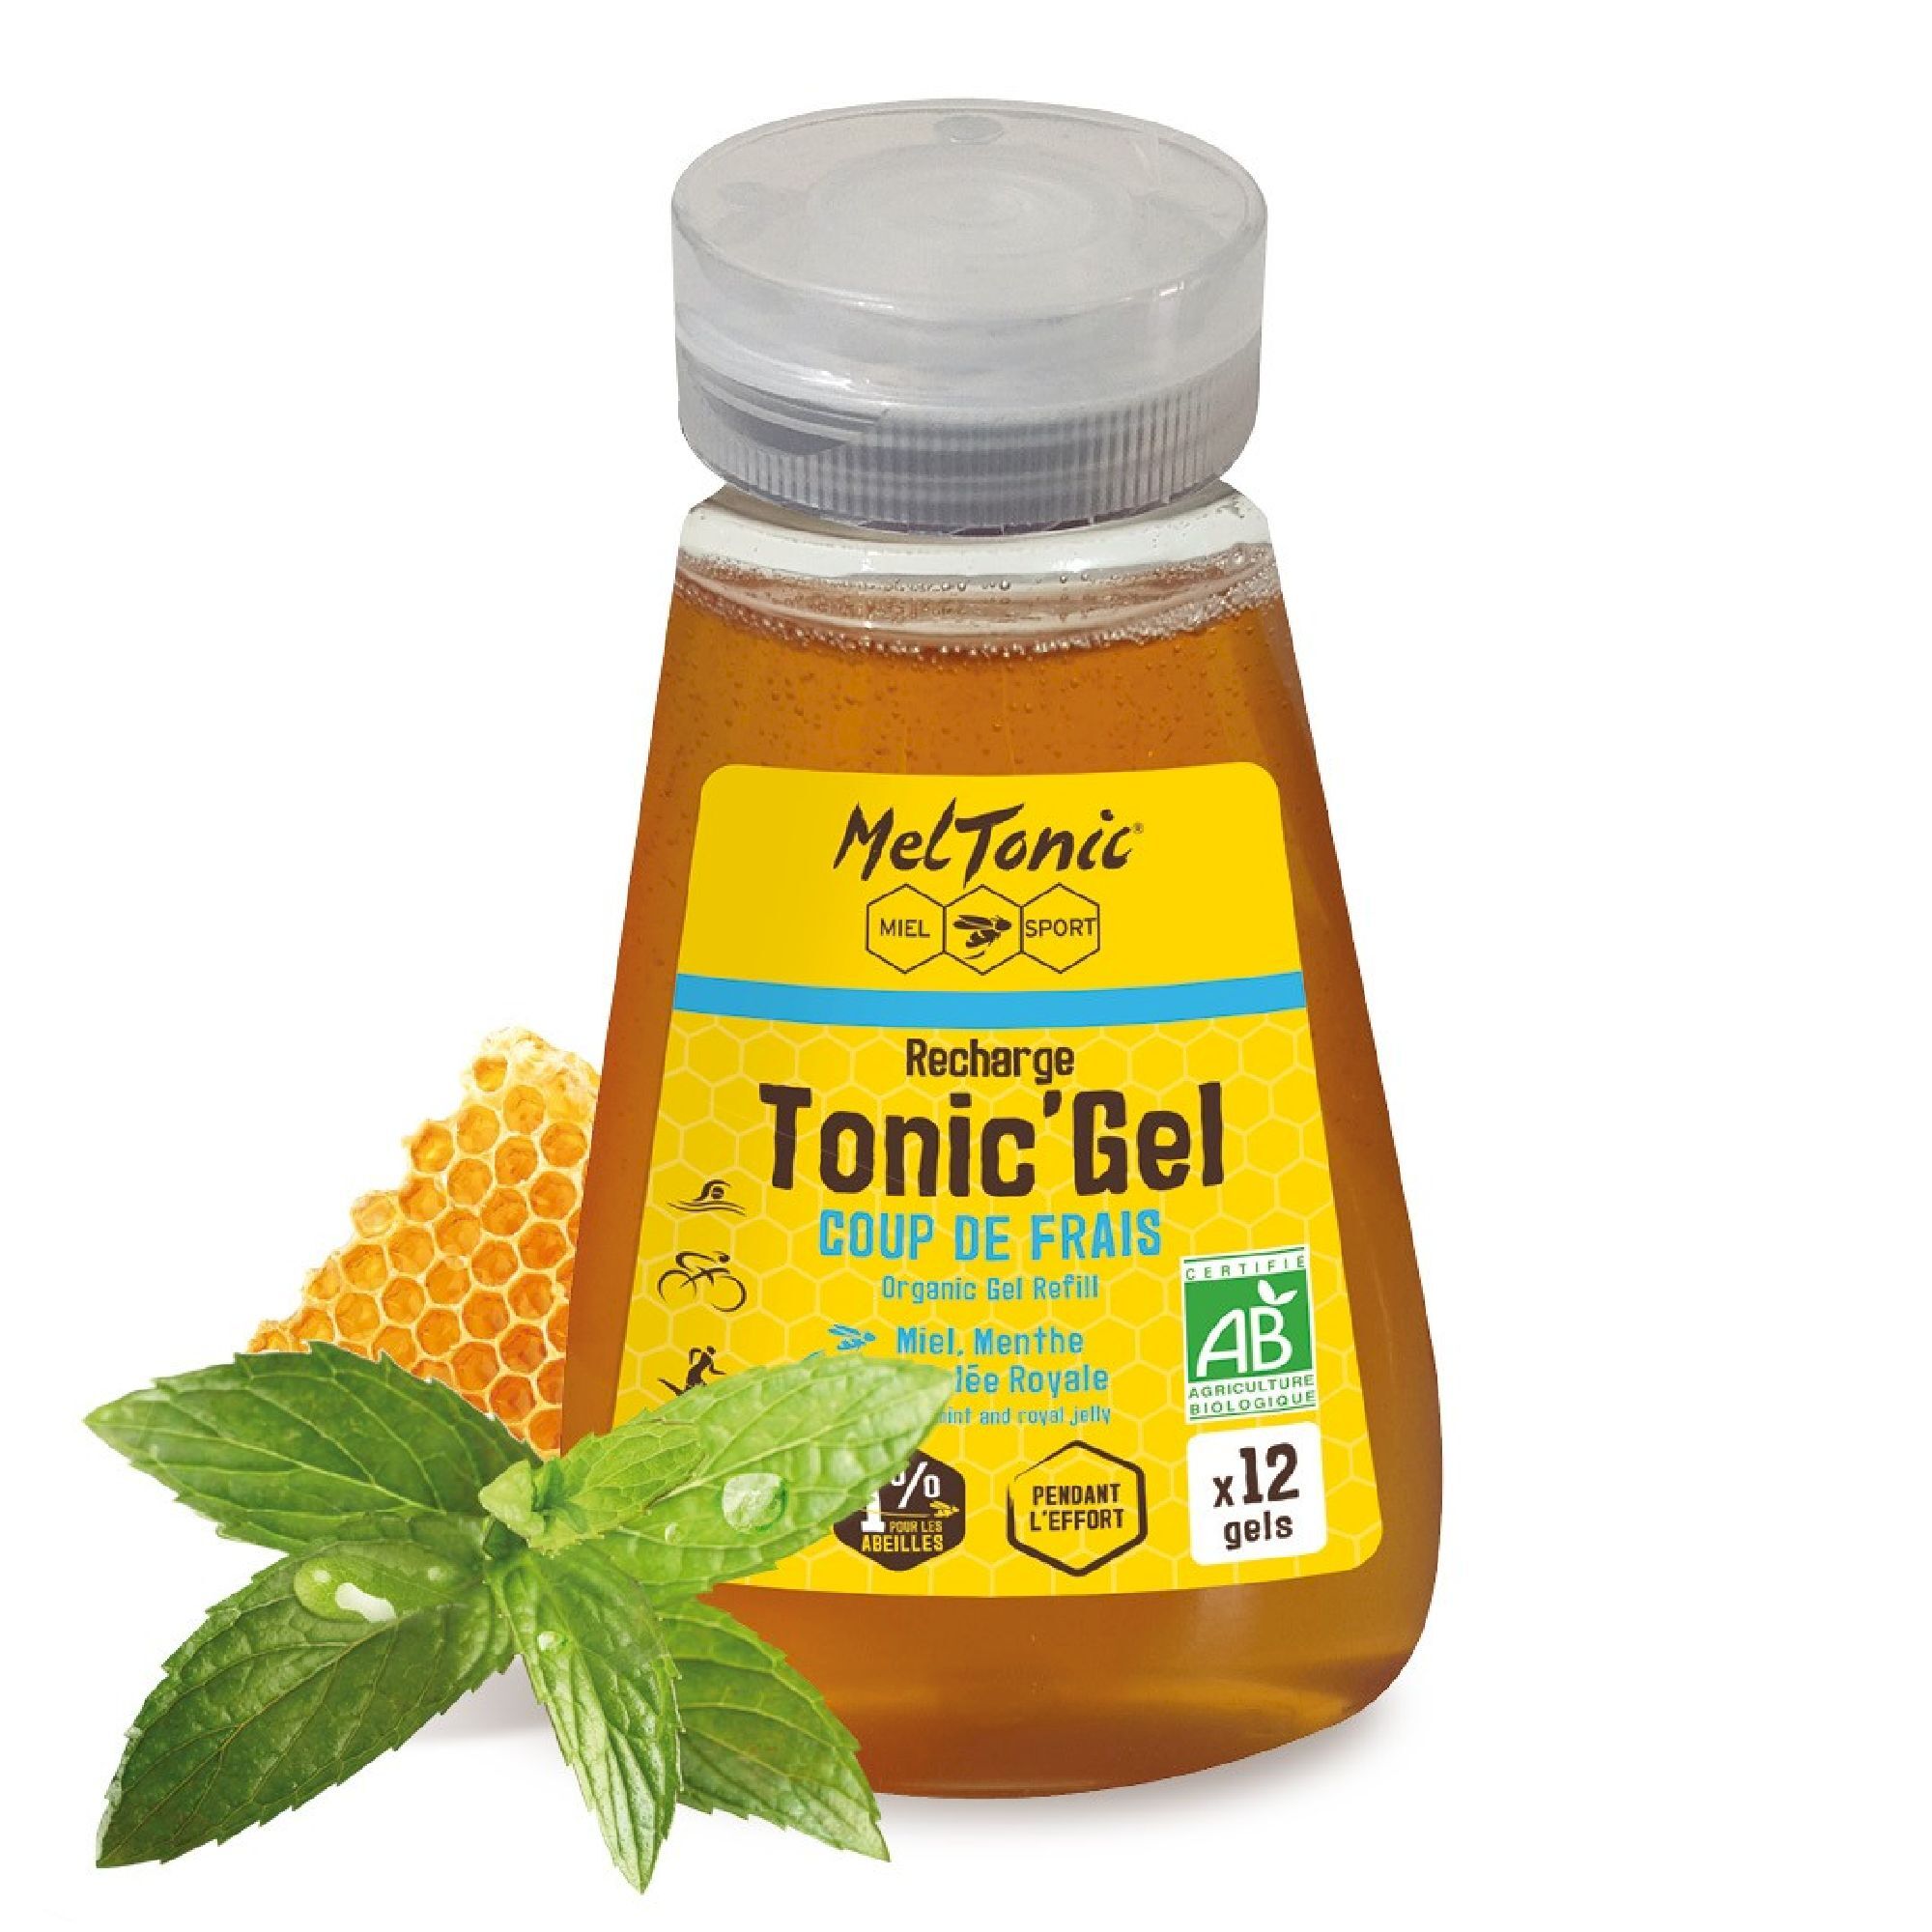 Meltonic Tonic Gel Bio Coup De Frais - Recharge Eco - Energy gel